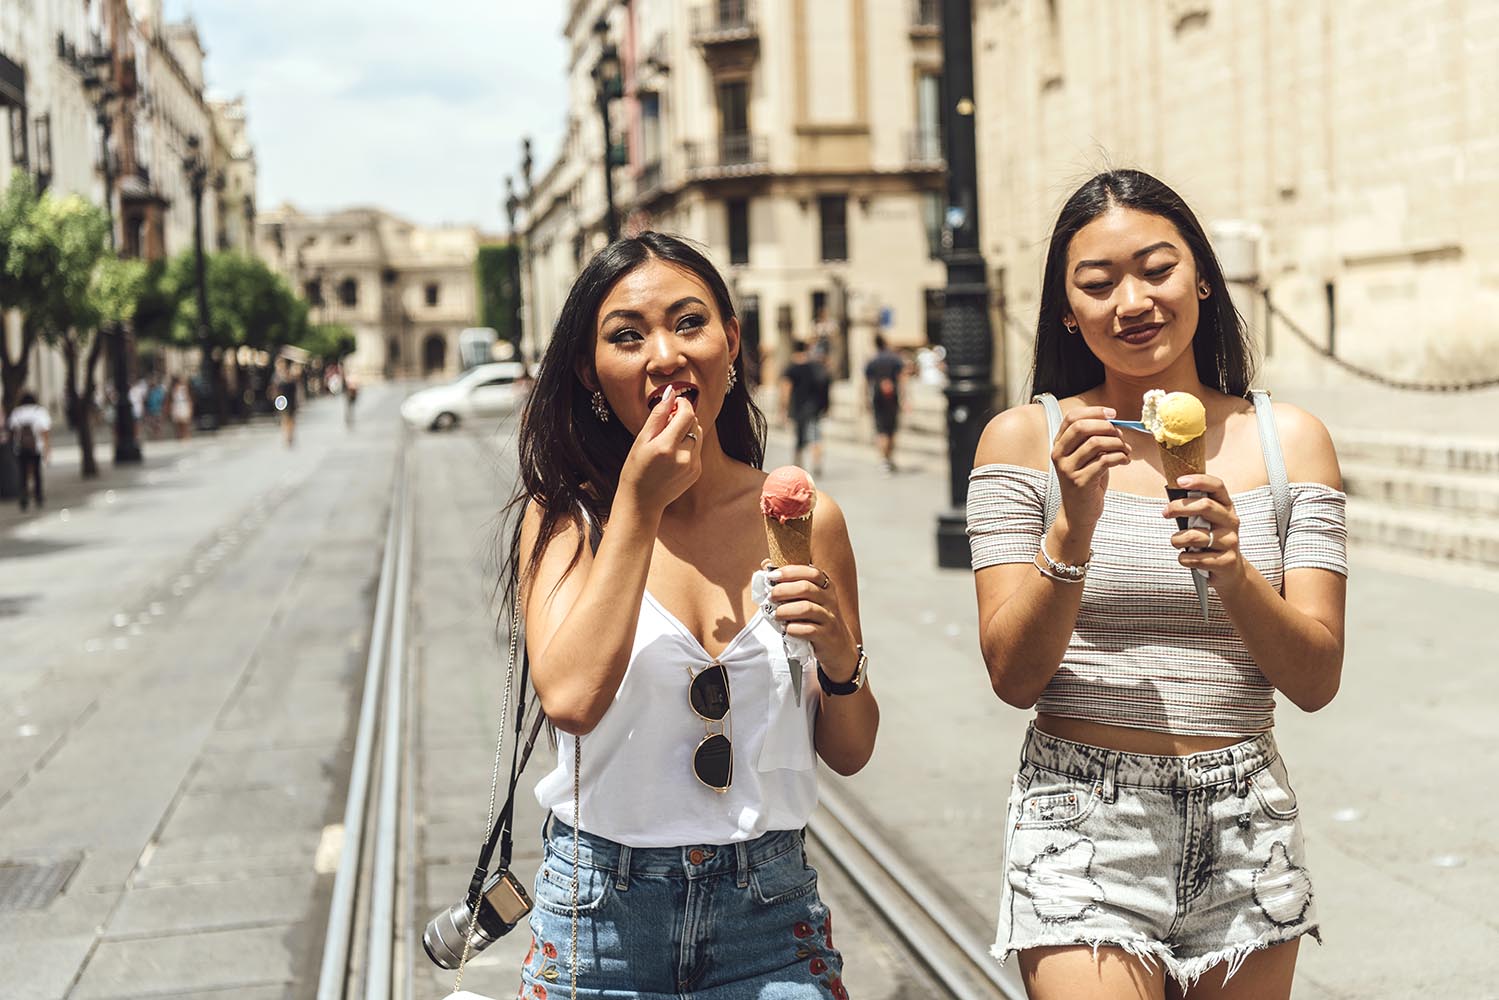 Two Chinese girls eating ice cream walking